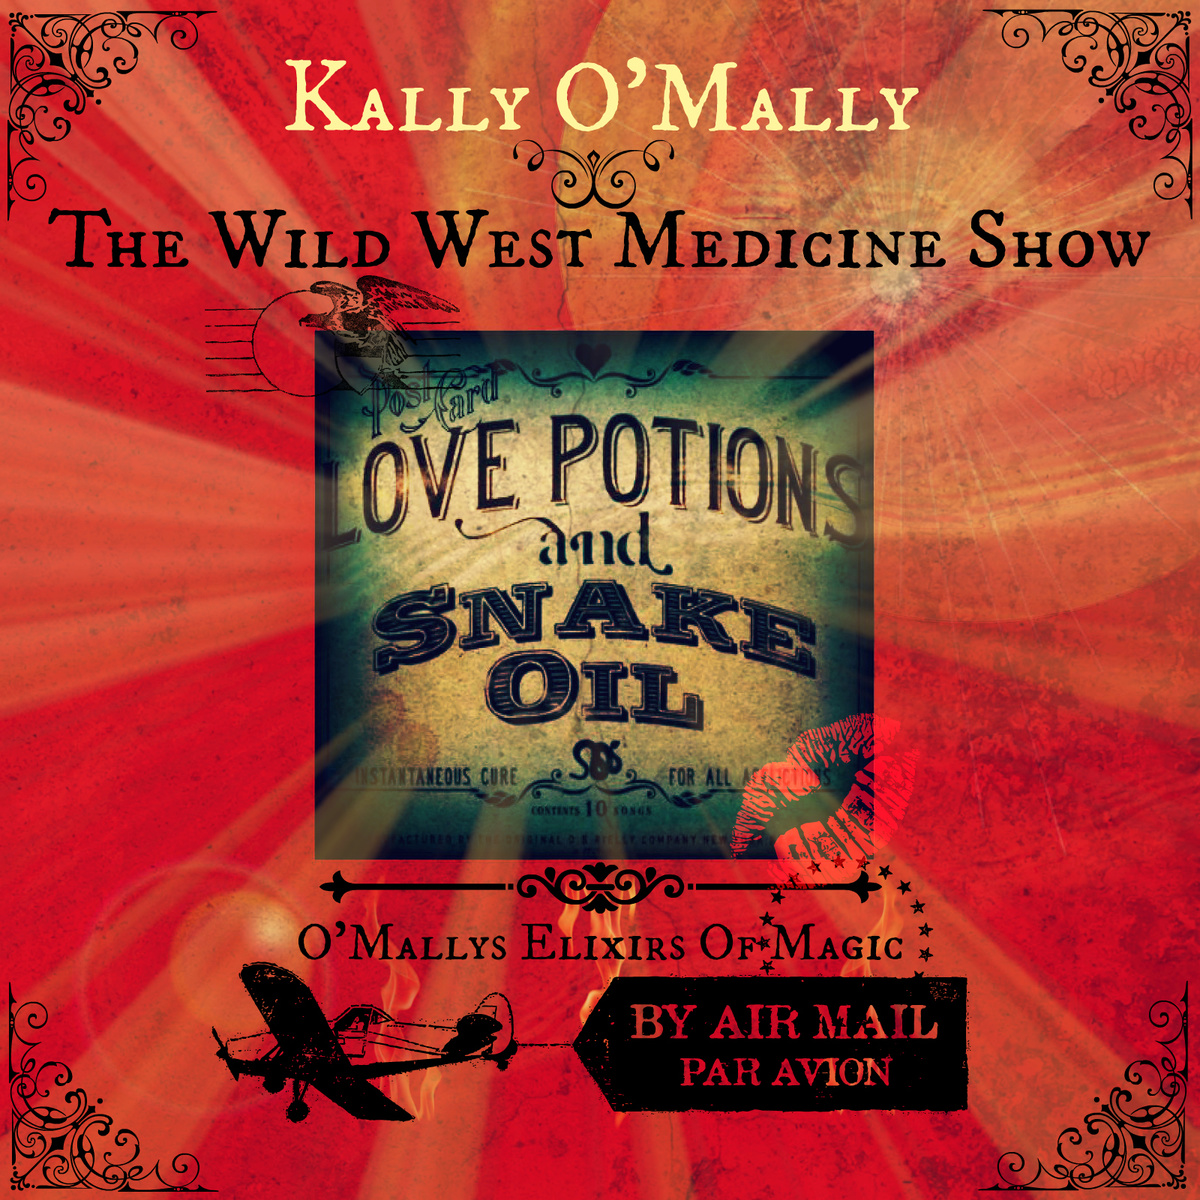  Kally O’Mally – The Wild West Medicine Show